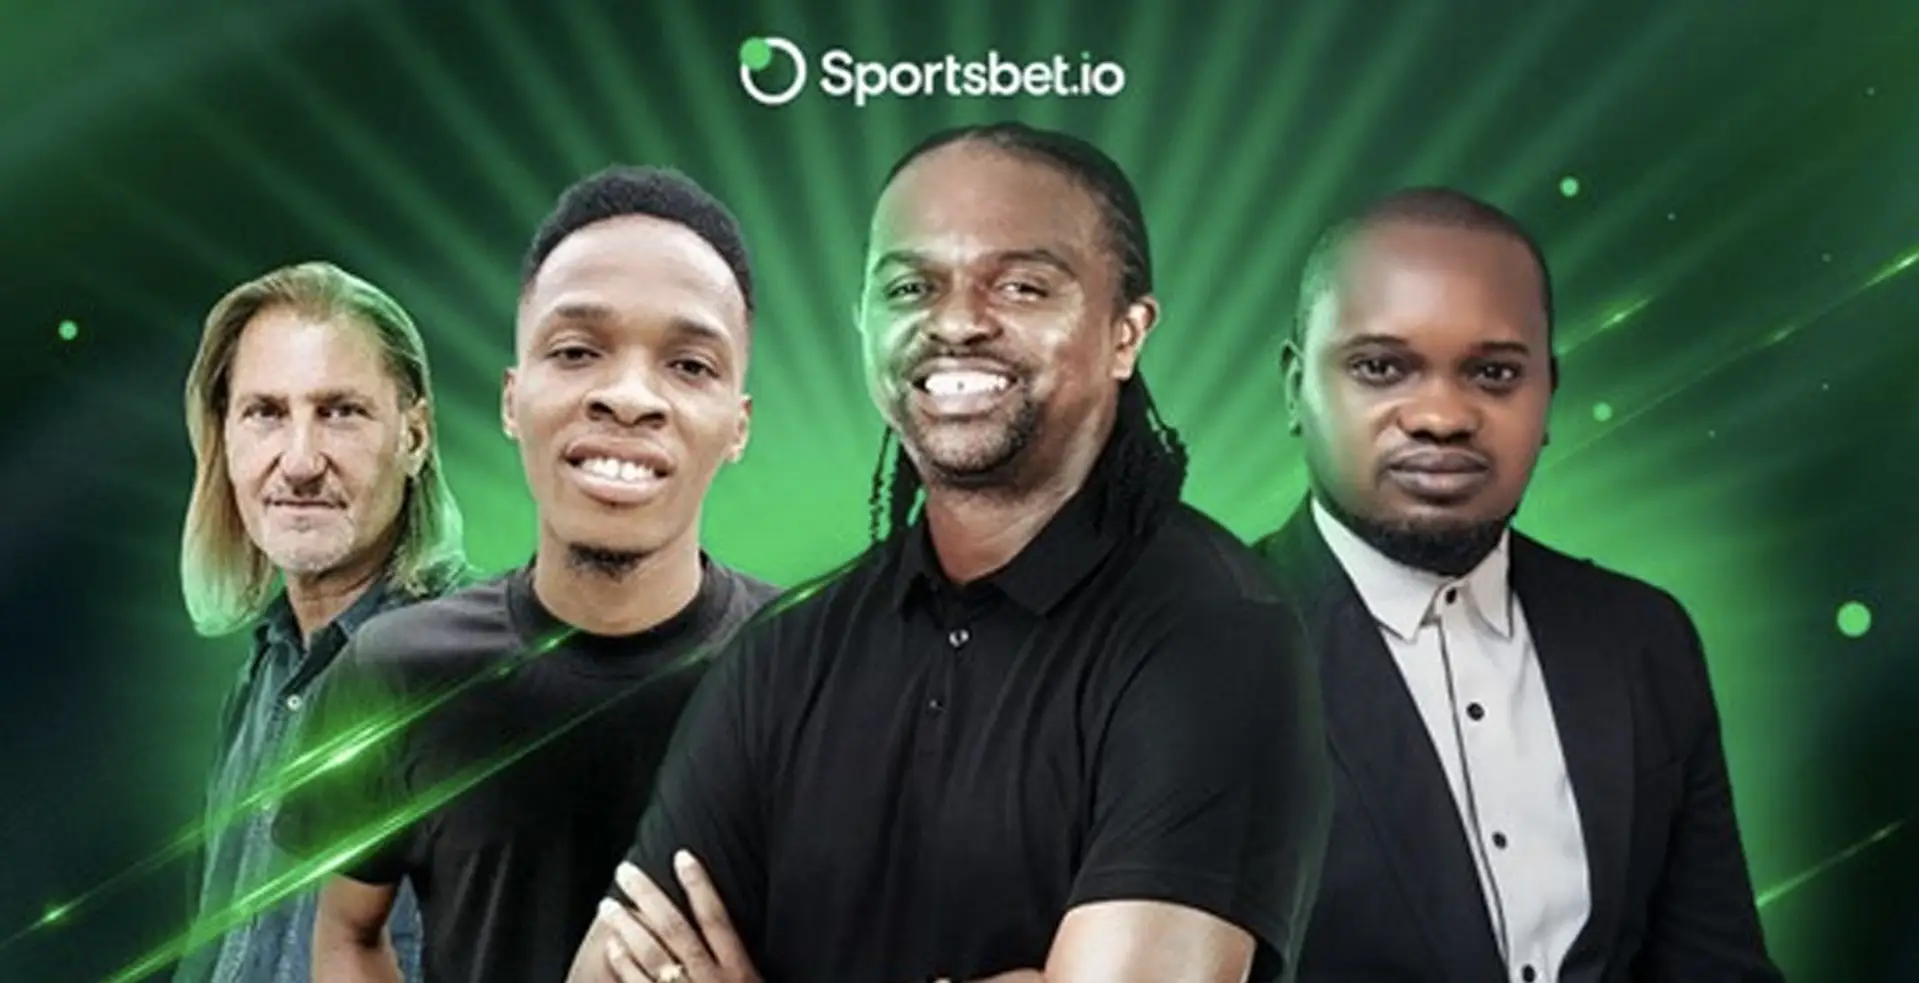 Three more stars join Nwankwo Kanu as ambassadors for Sportsbet.io